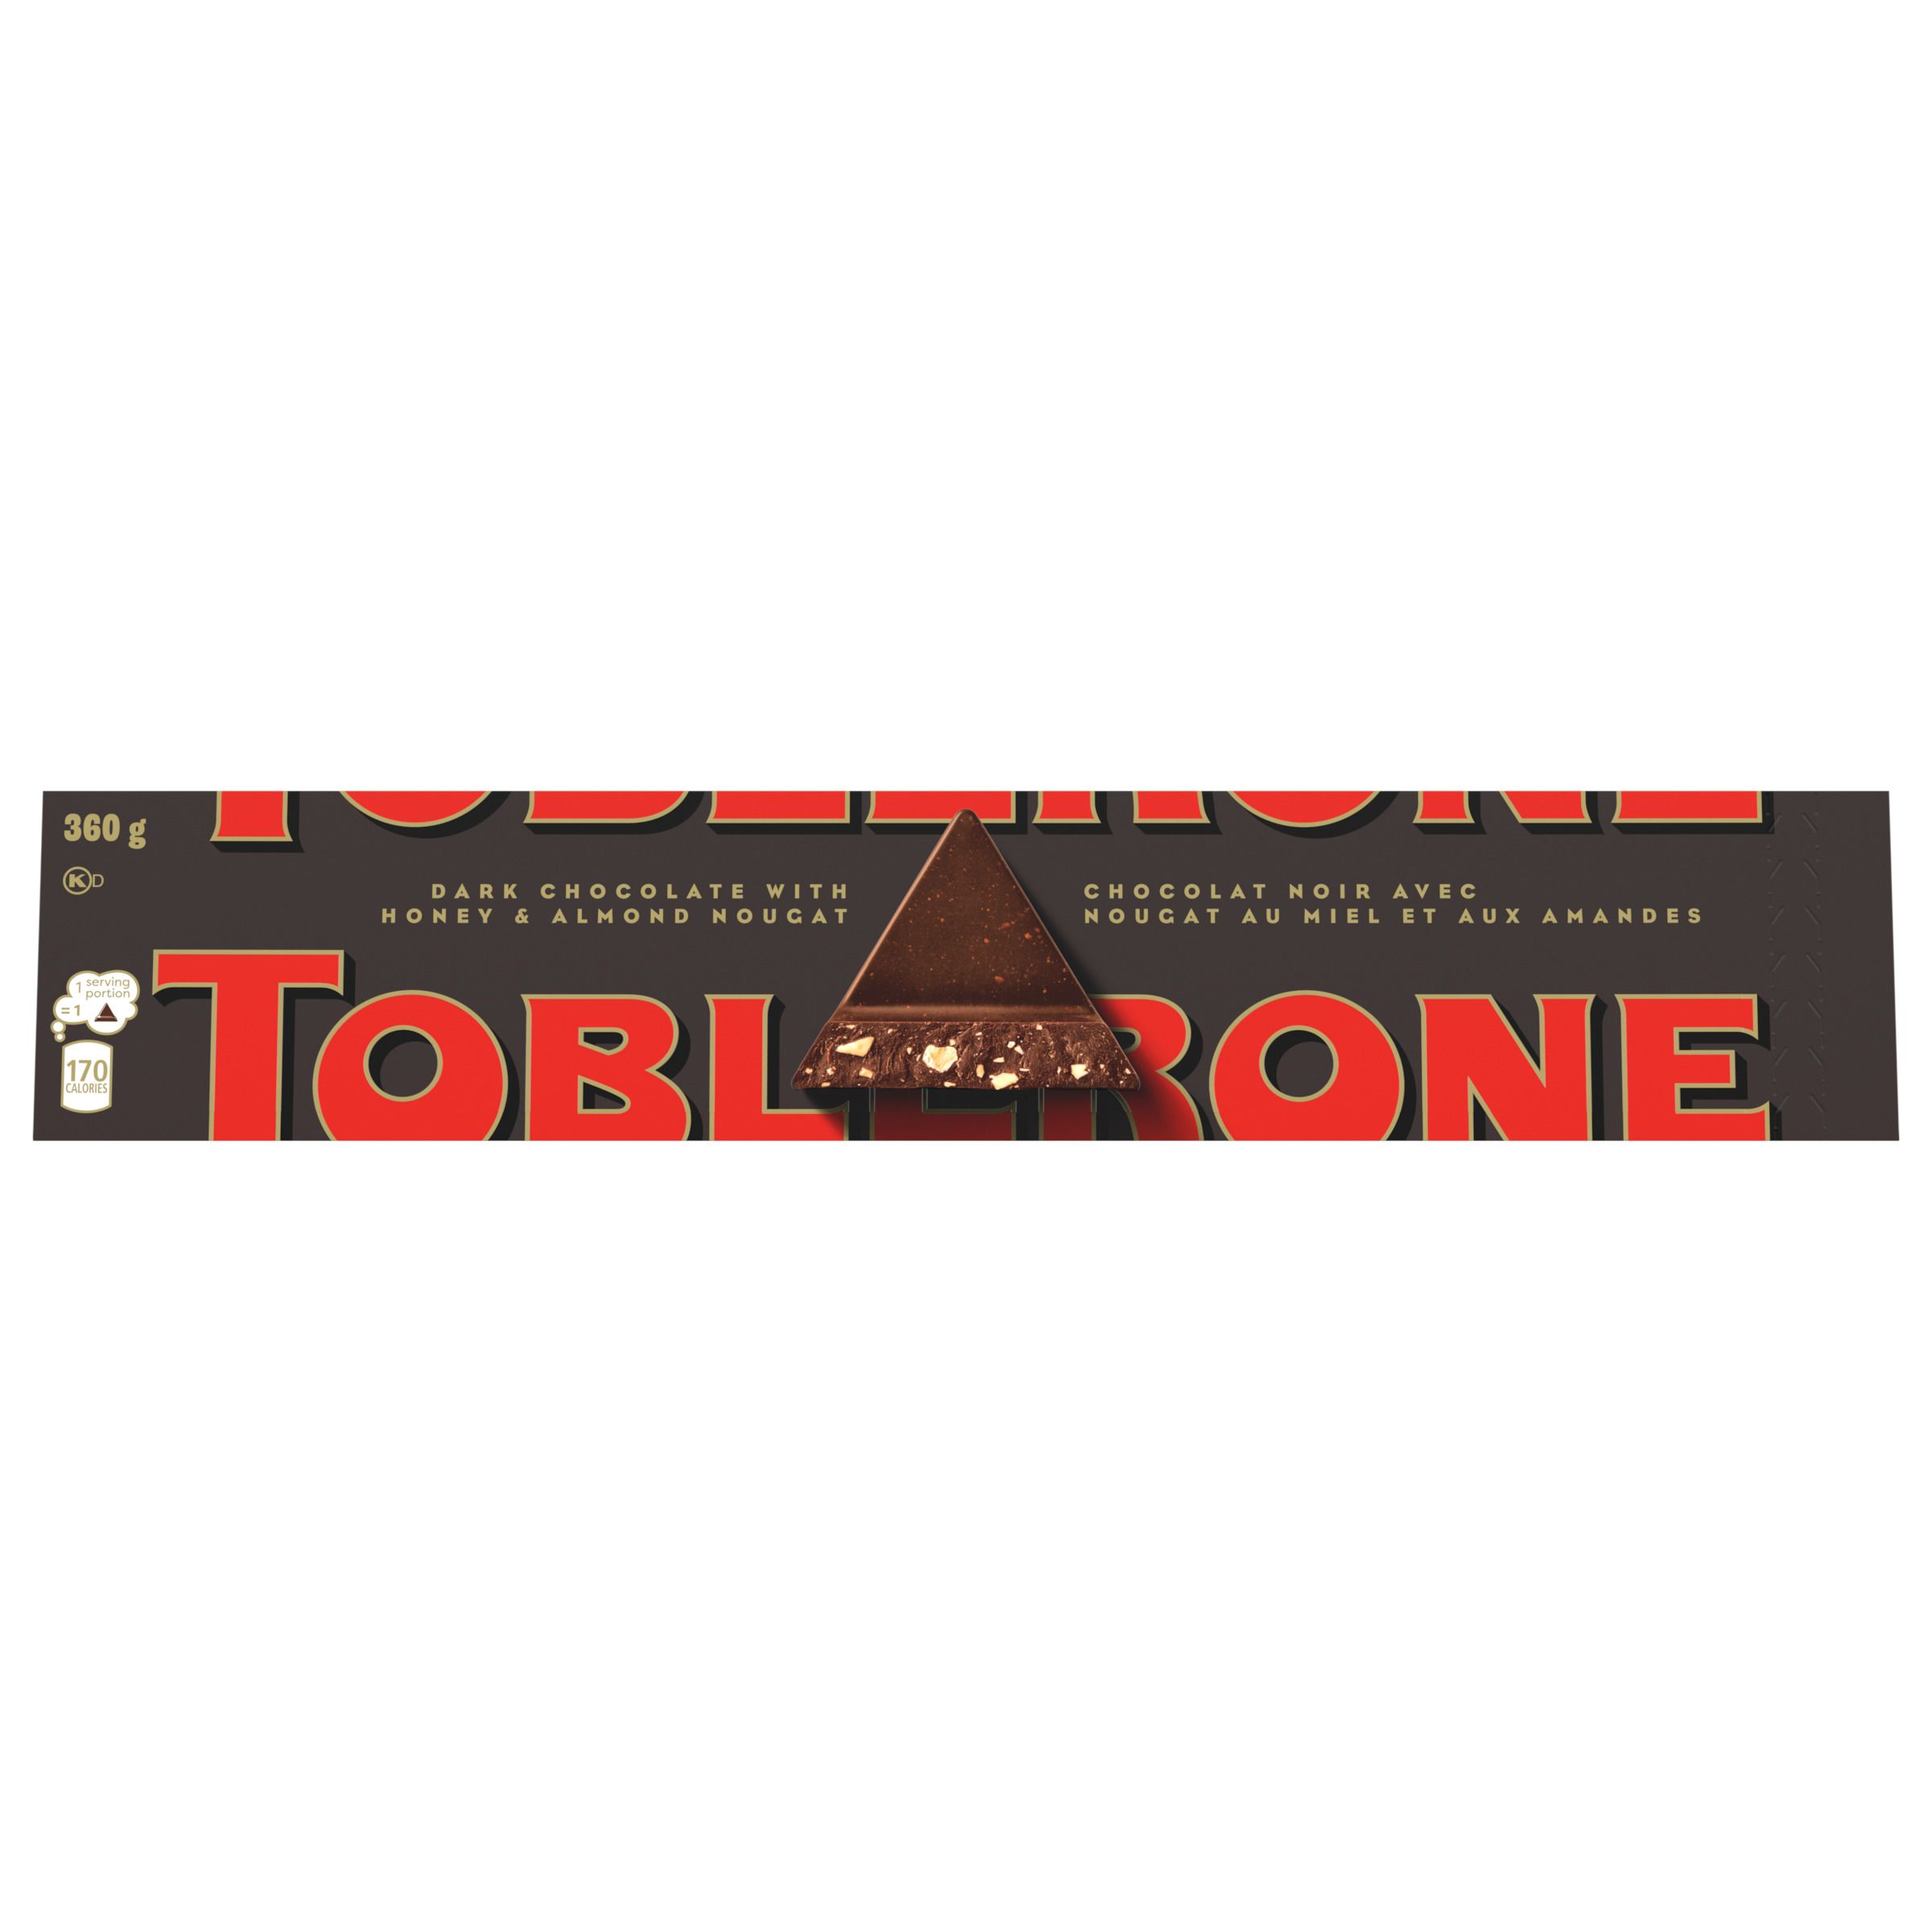 TOBLERONE Dark Chocolate with Honey and Almond Nougat Bar (360 g)